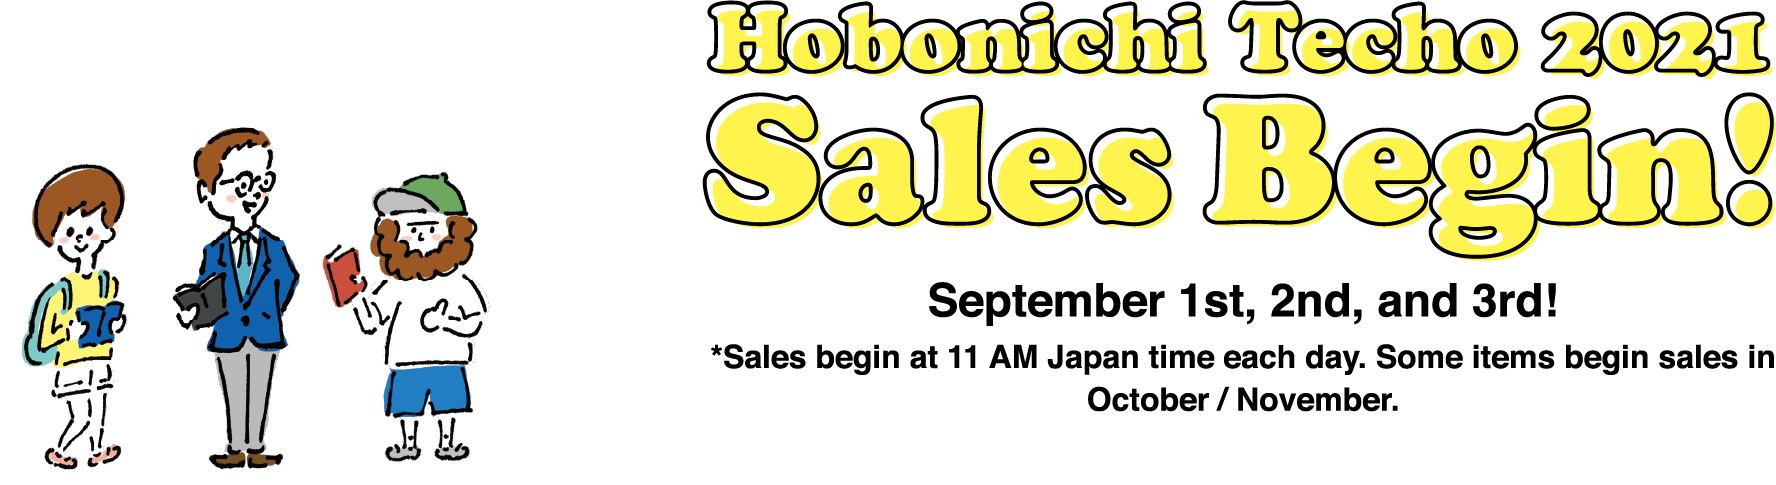 Hobonichi Techo 2021 Sales Begin!